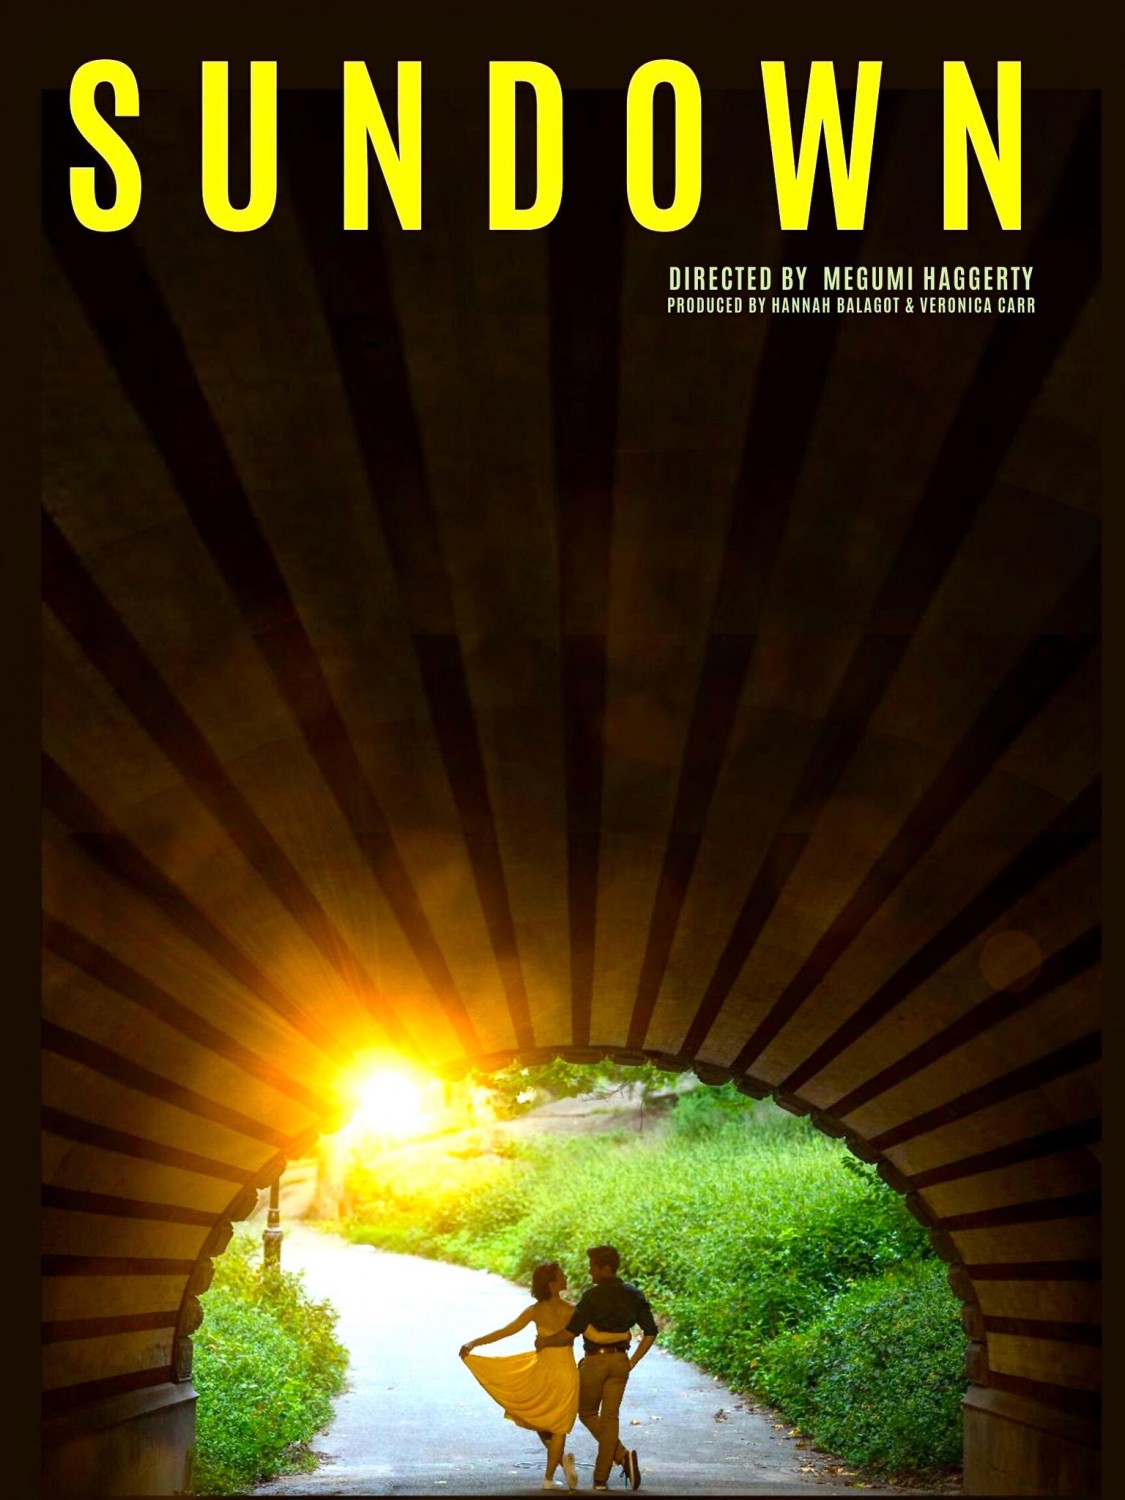 Extra Large Movie Poster Image for Sundown